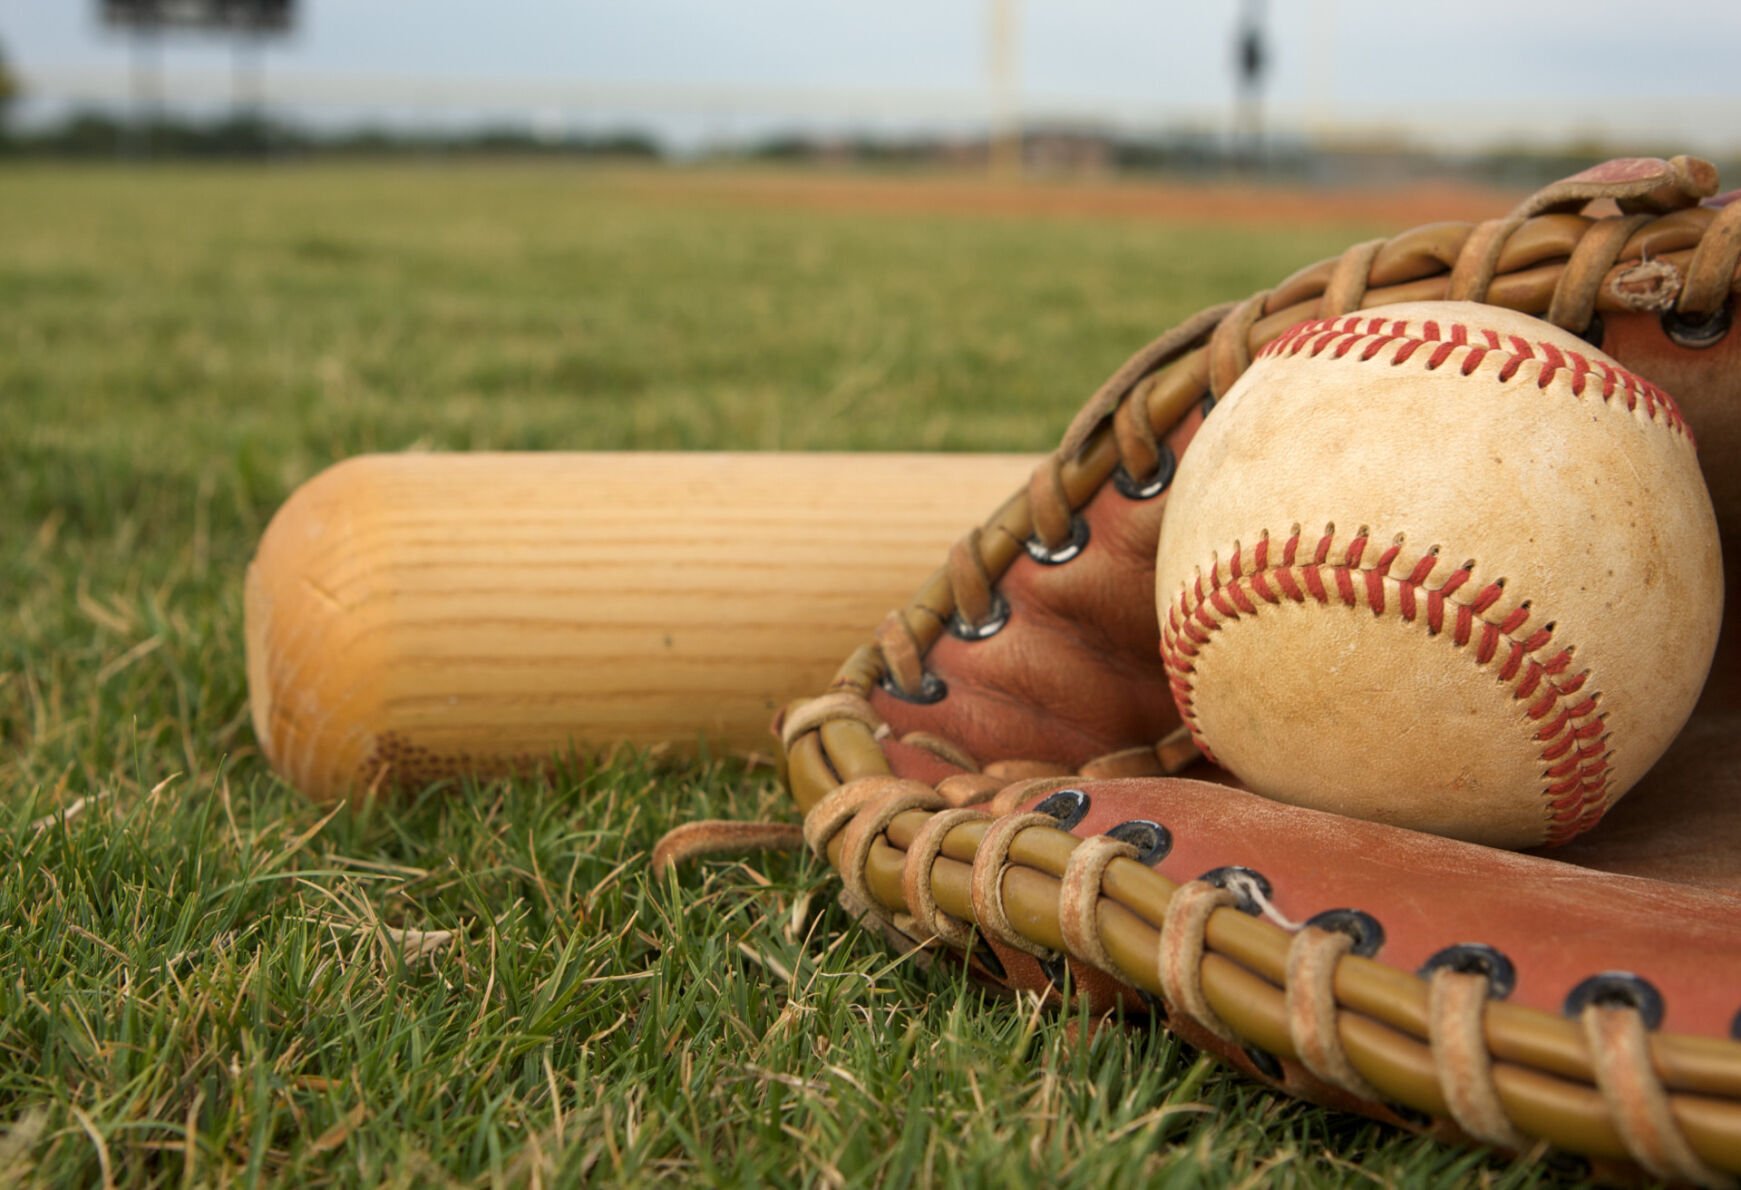 High school sports roundup: Union Grove baseball team runs win streak to 12 games